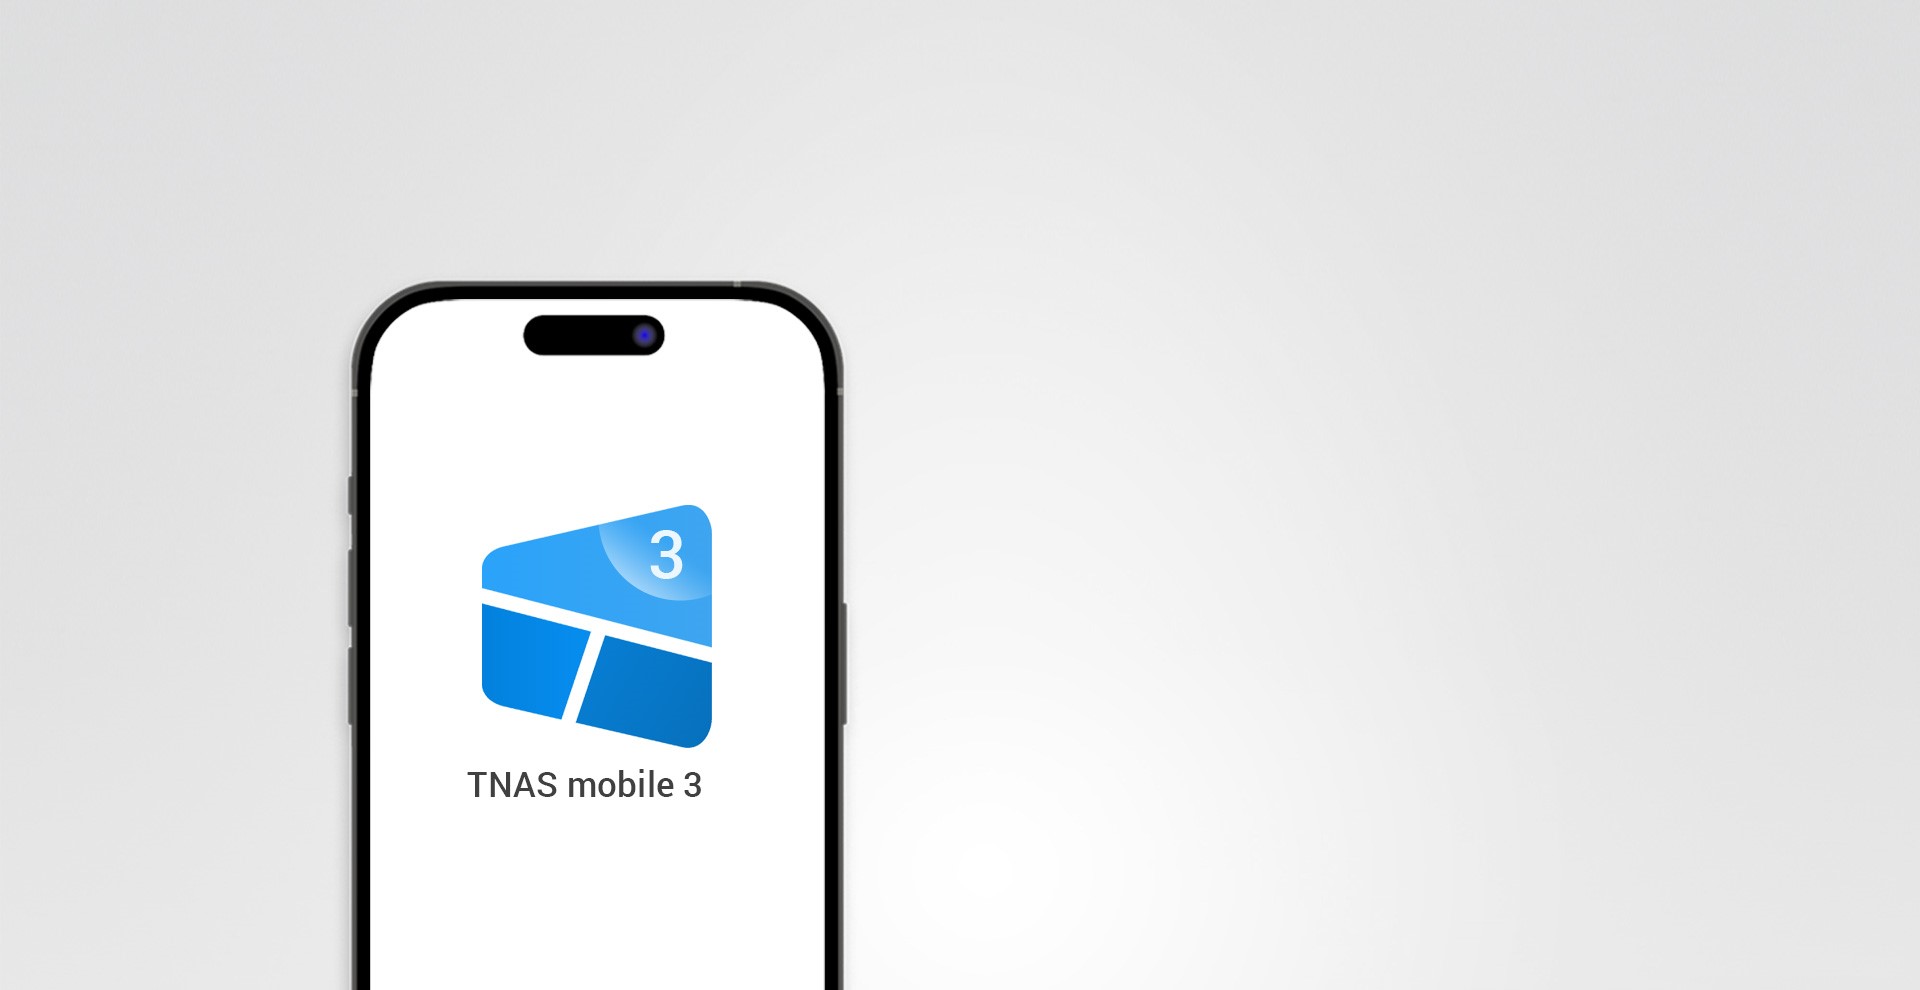 TNAS mobile 3